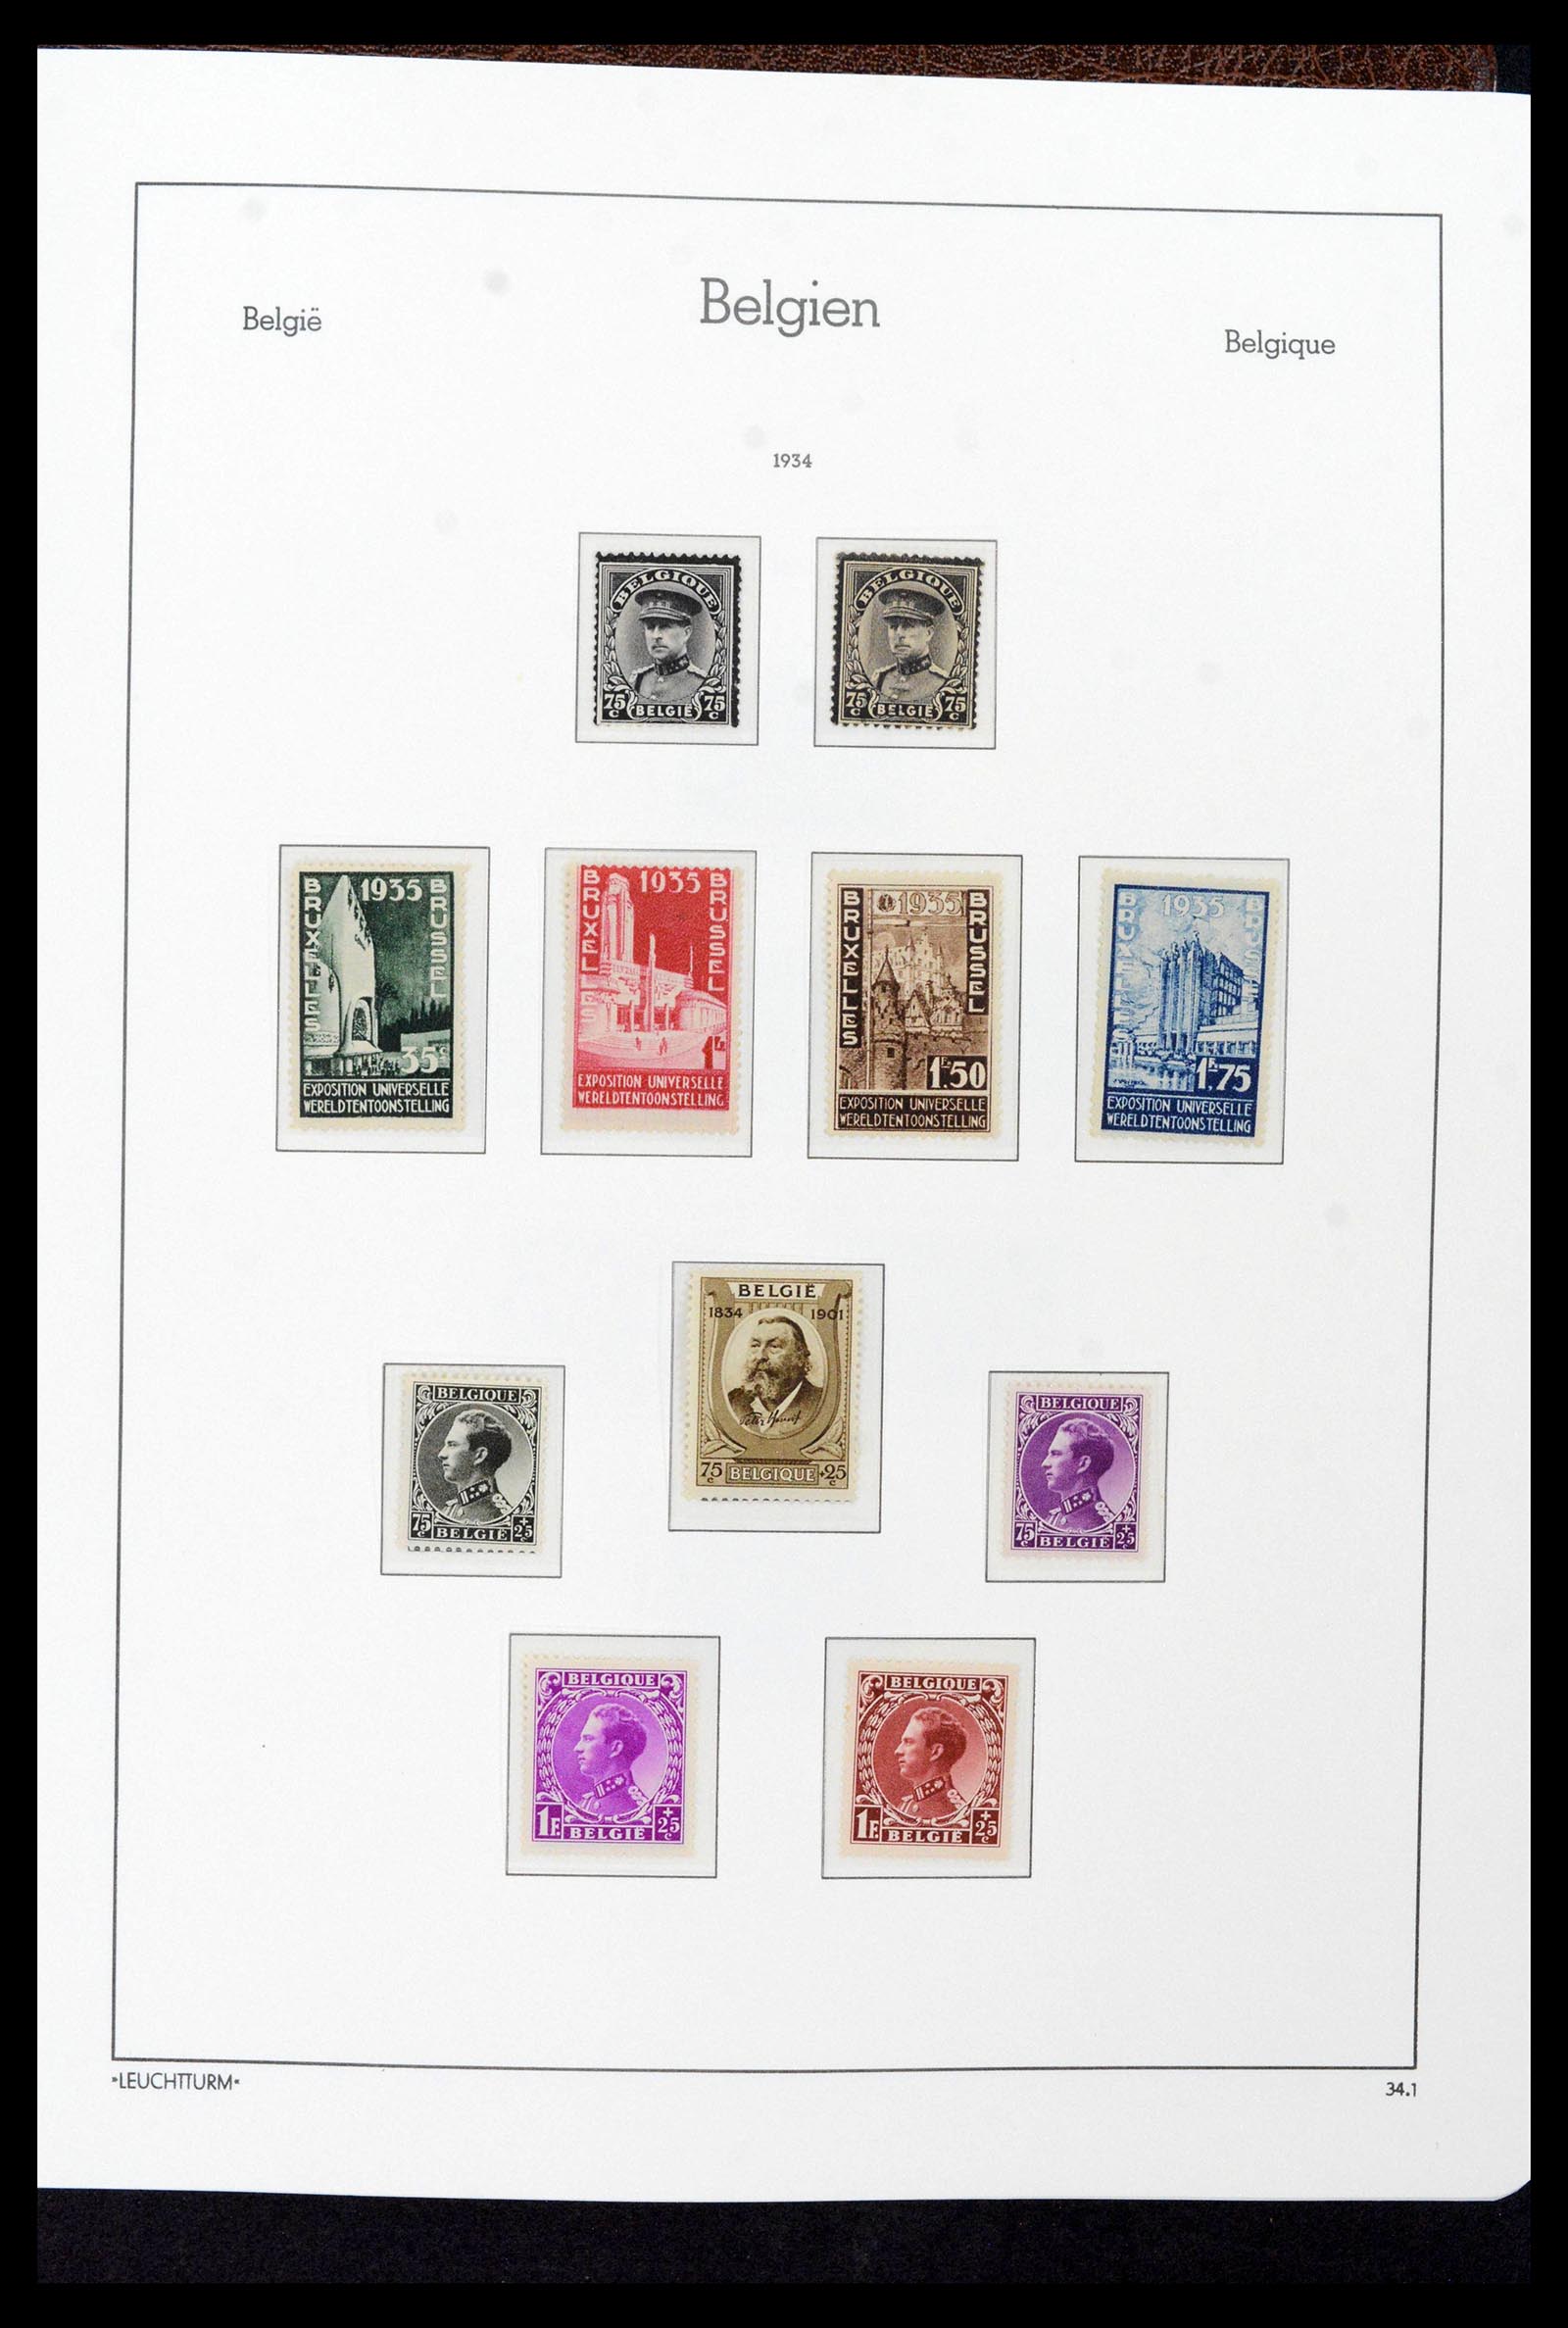 39137 0051 - Stamp collection 39137 Belgium 1849-2002.